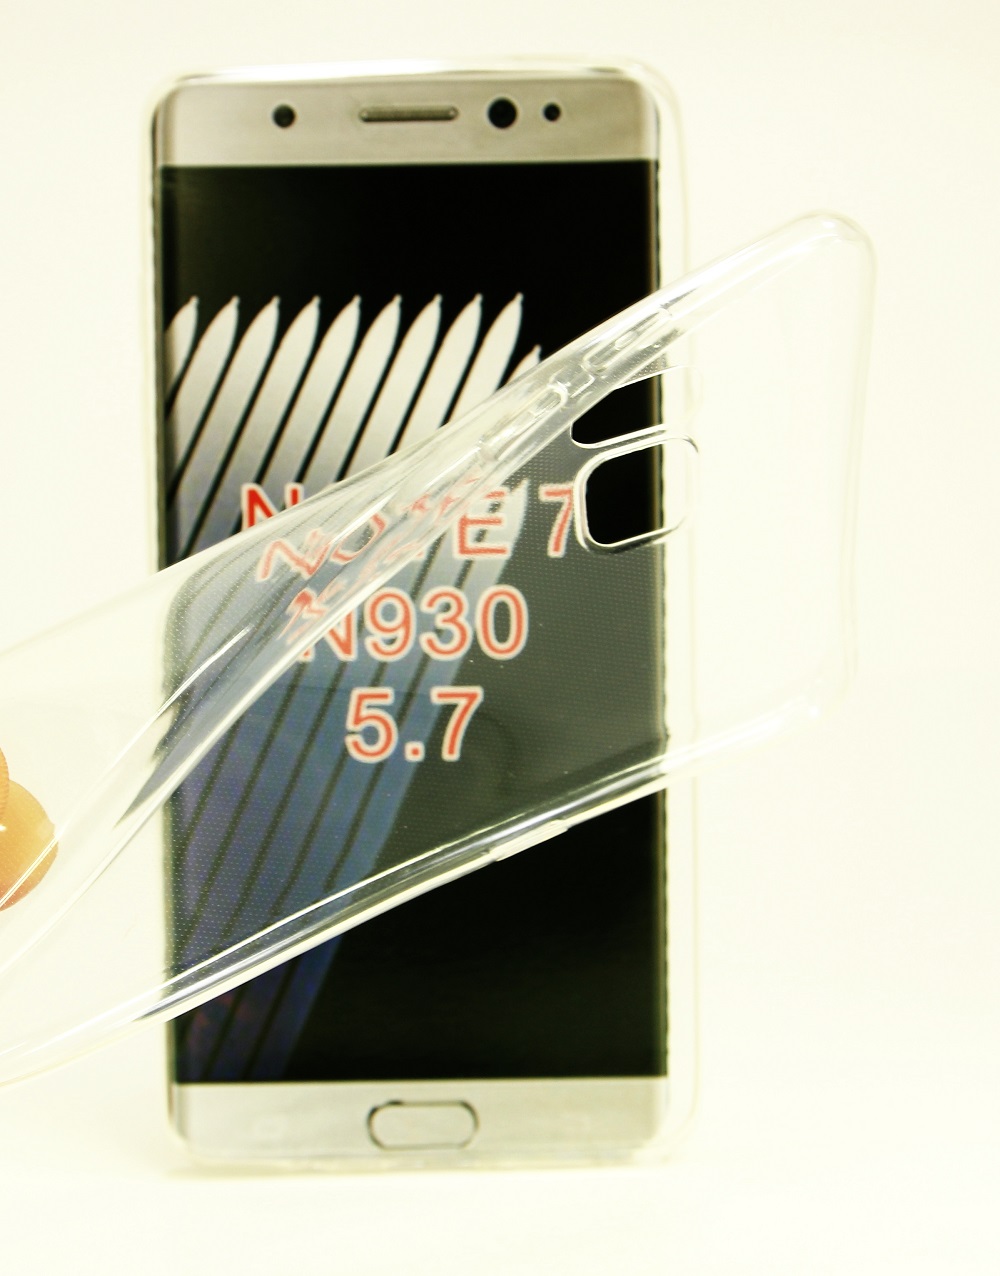 Ultra Thin TPU Cover Samsung Galaxy Note 7 (N930F)